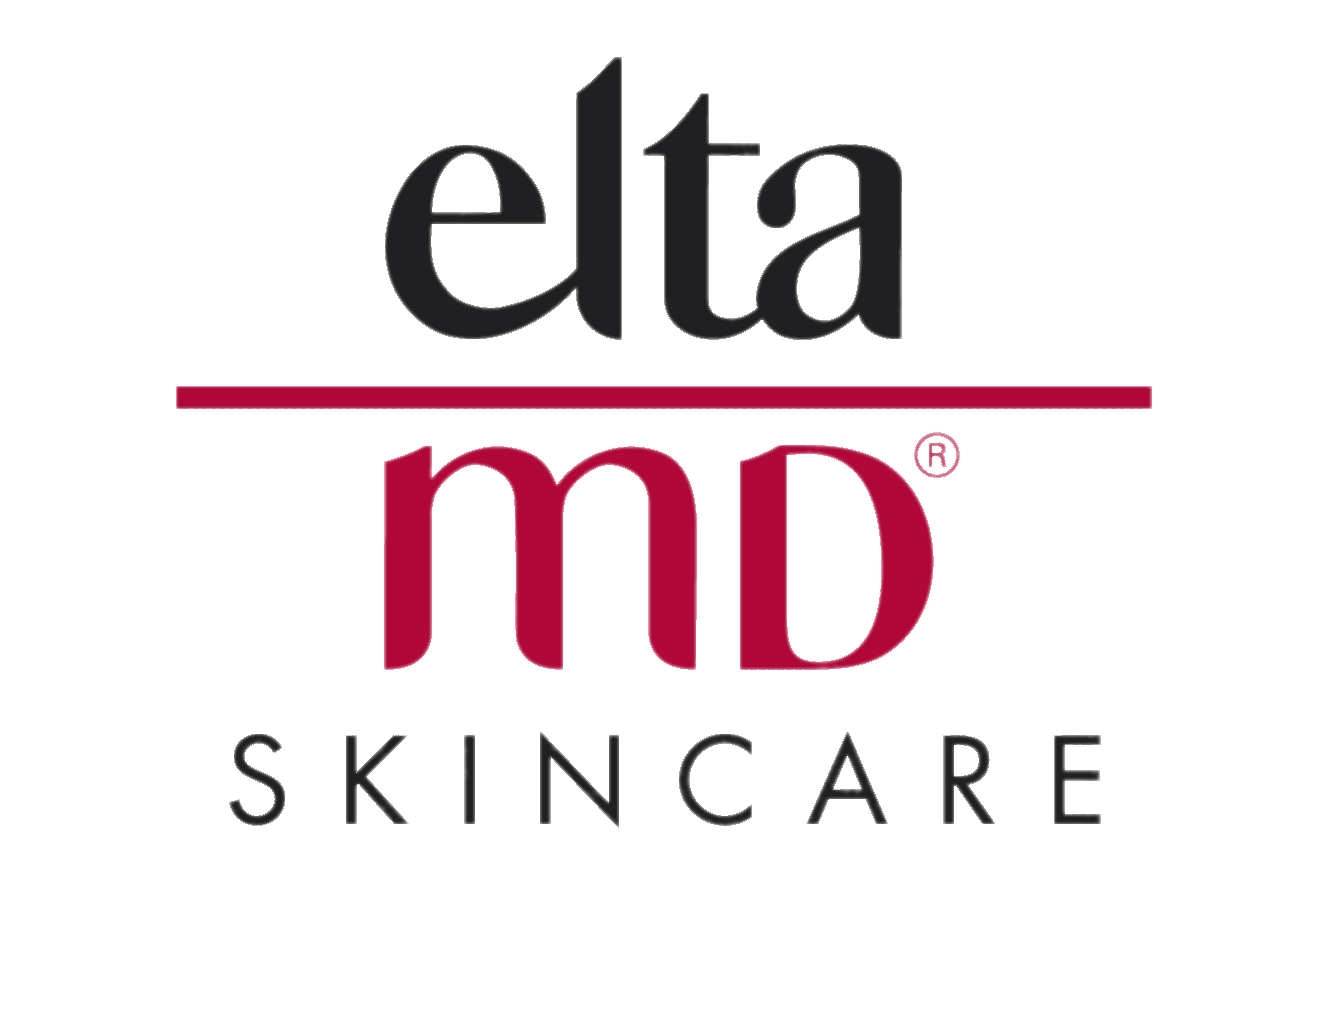 EltaMD skincare logo